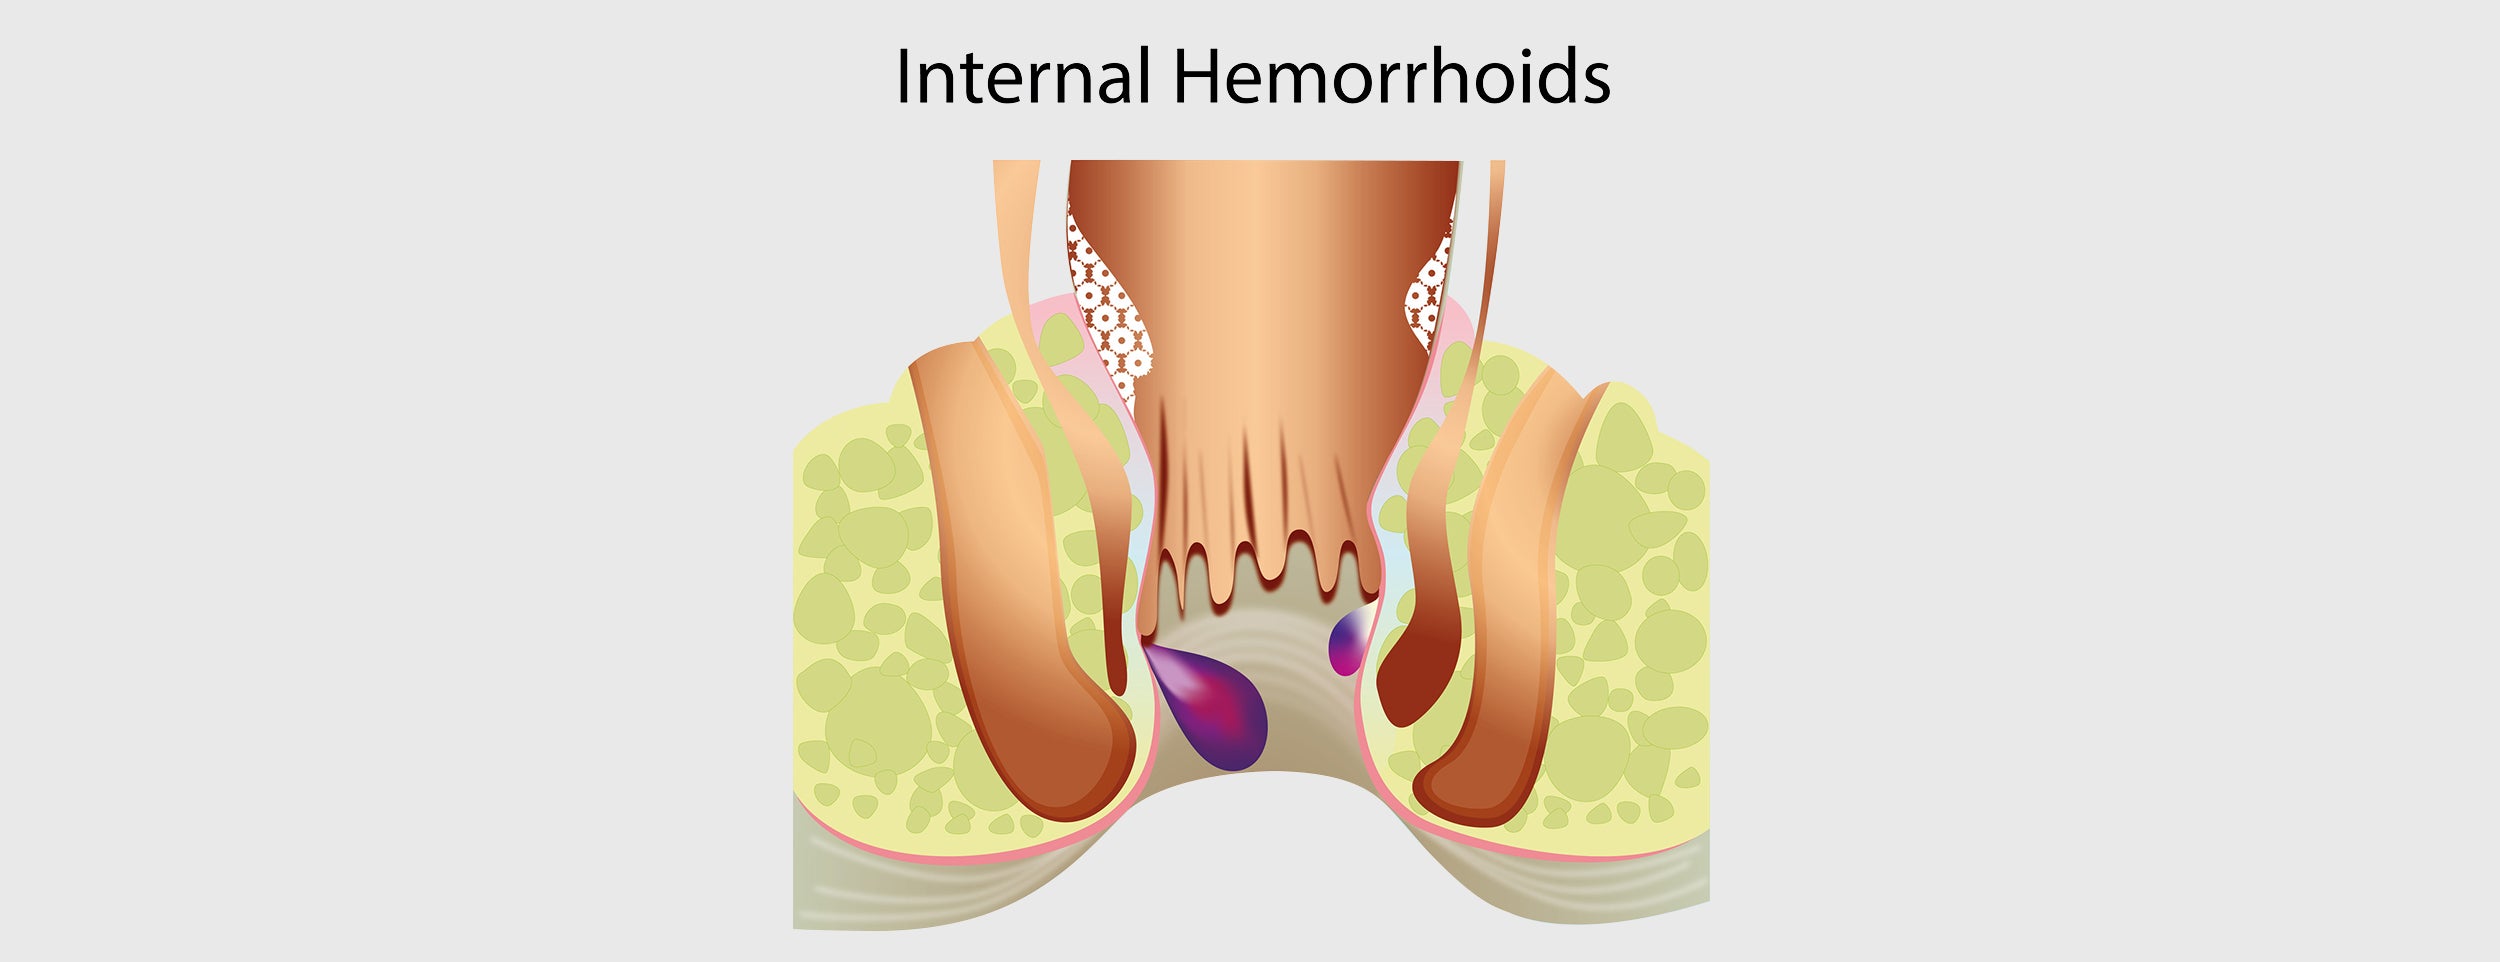 Mucus associated with hemorrhoids